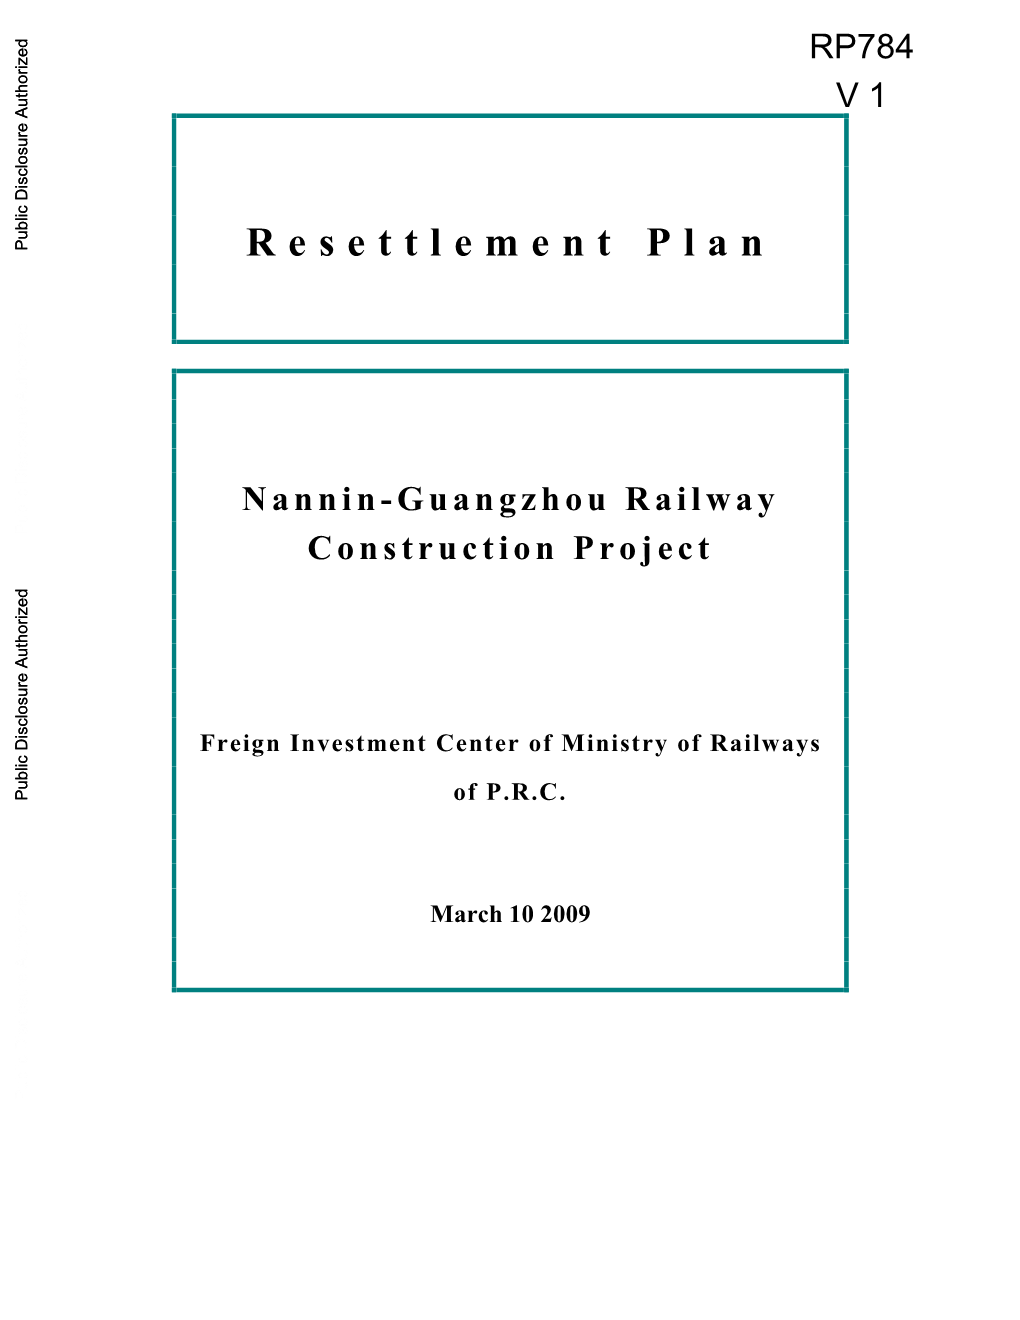 Chapter VII Implementation Plan for Resettlement